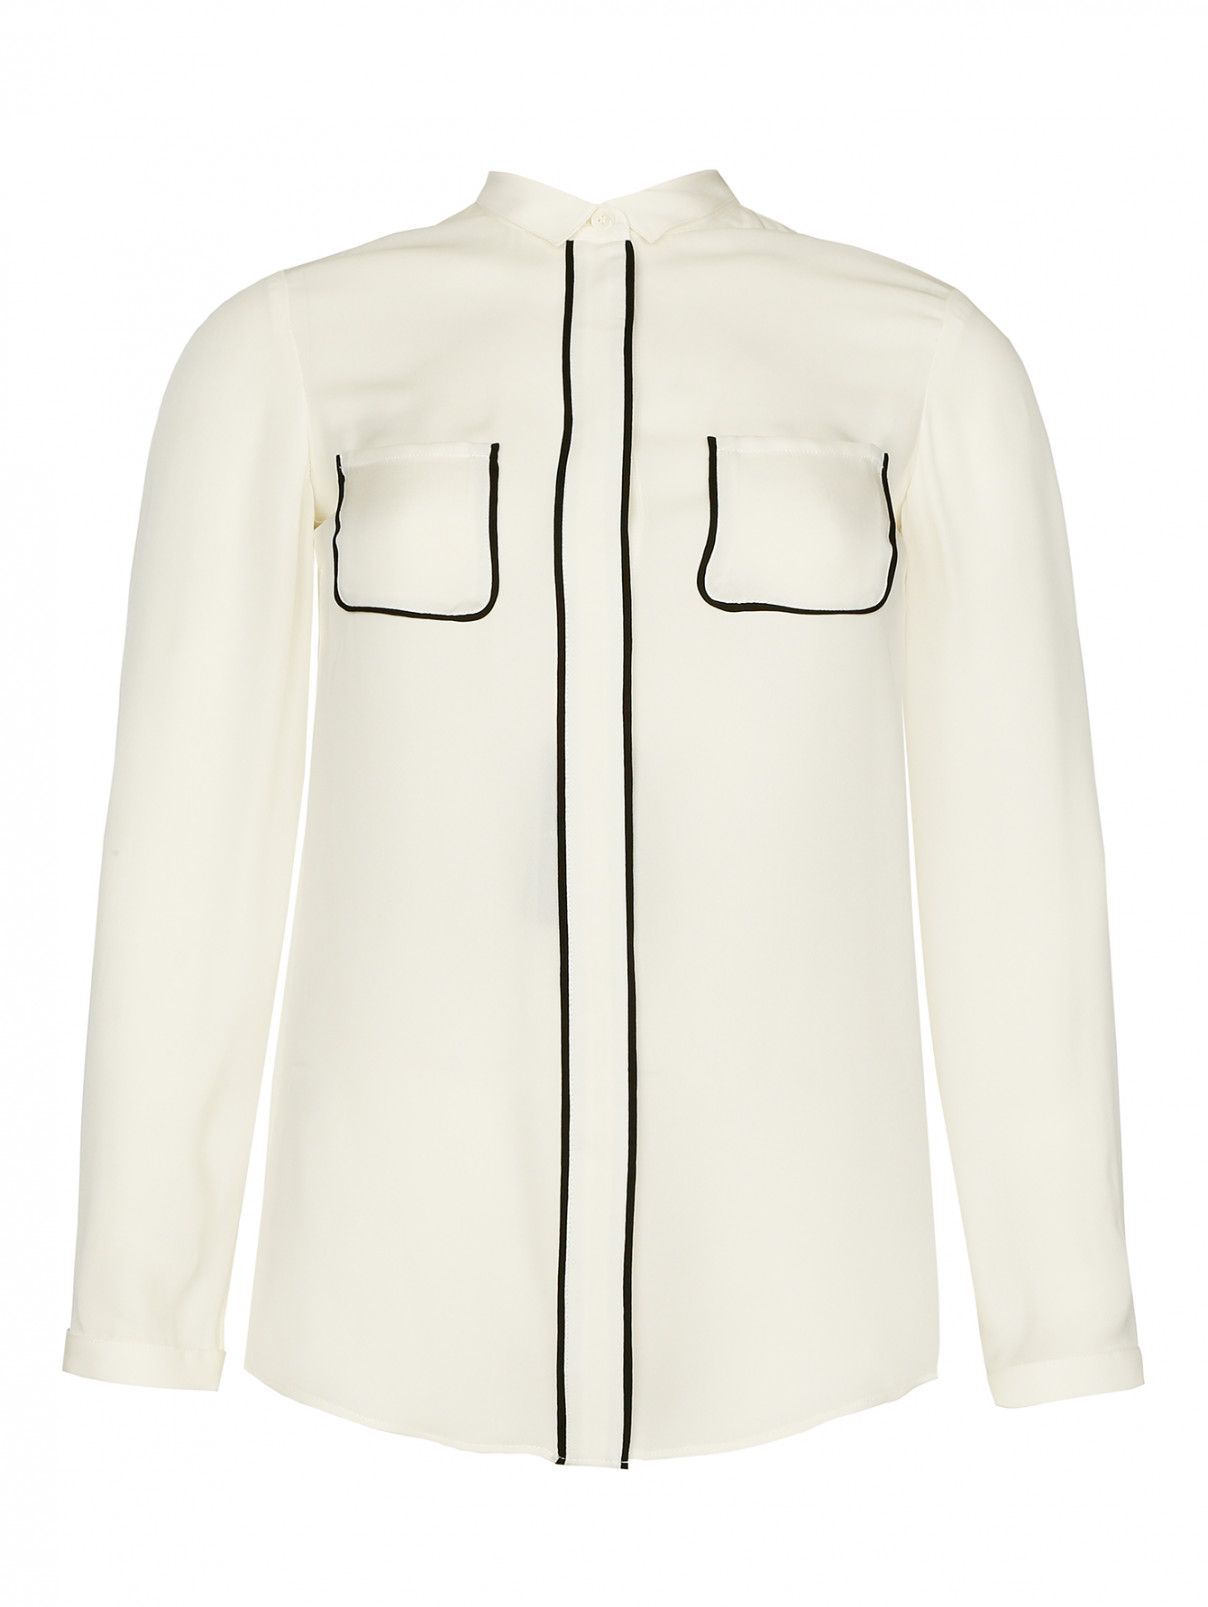 Рубашка из шелка-крепдешина с карманами Emporio Armani  –  Общий вид  – Цвет:  Белый